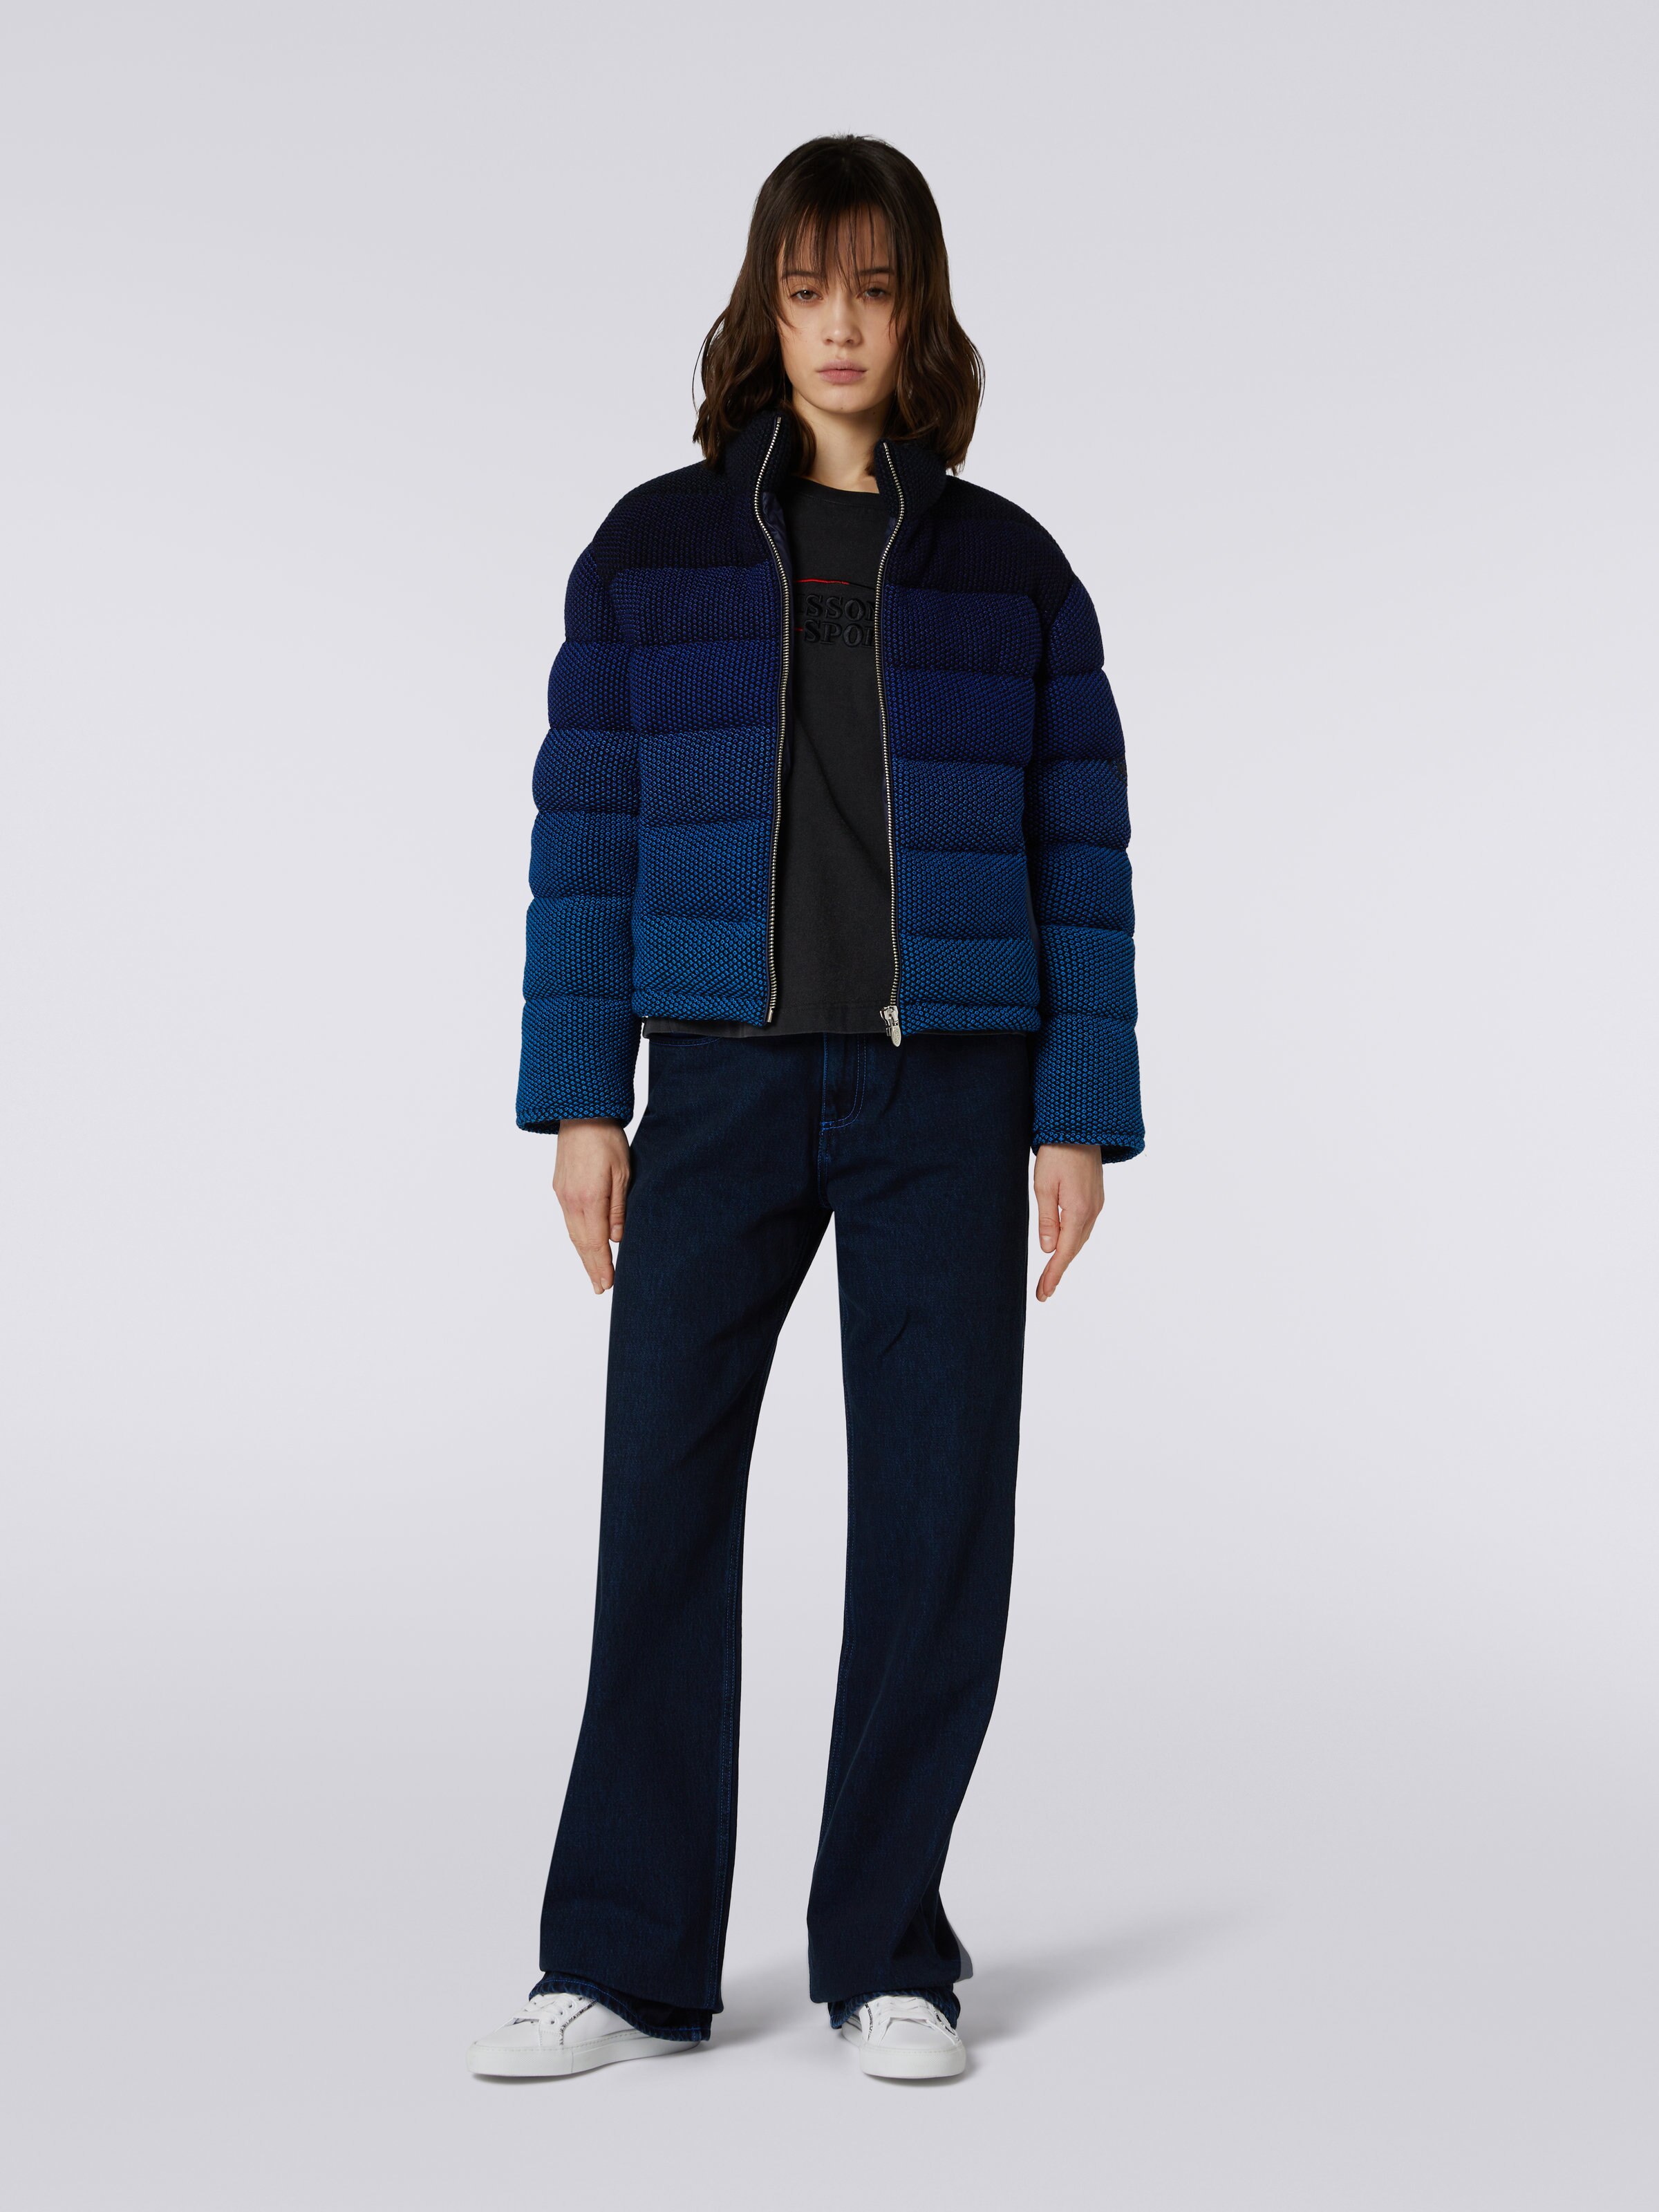 Cropped jacket in dégradé padded cotton blend, Black & Blue - 1